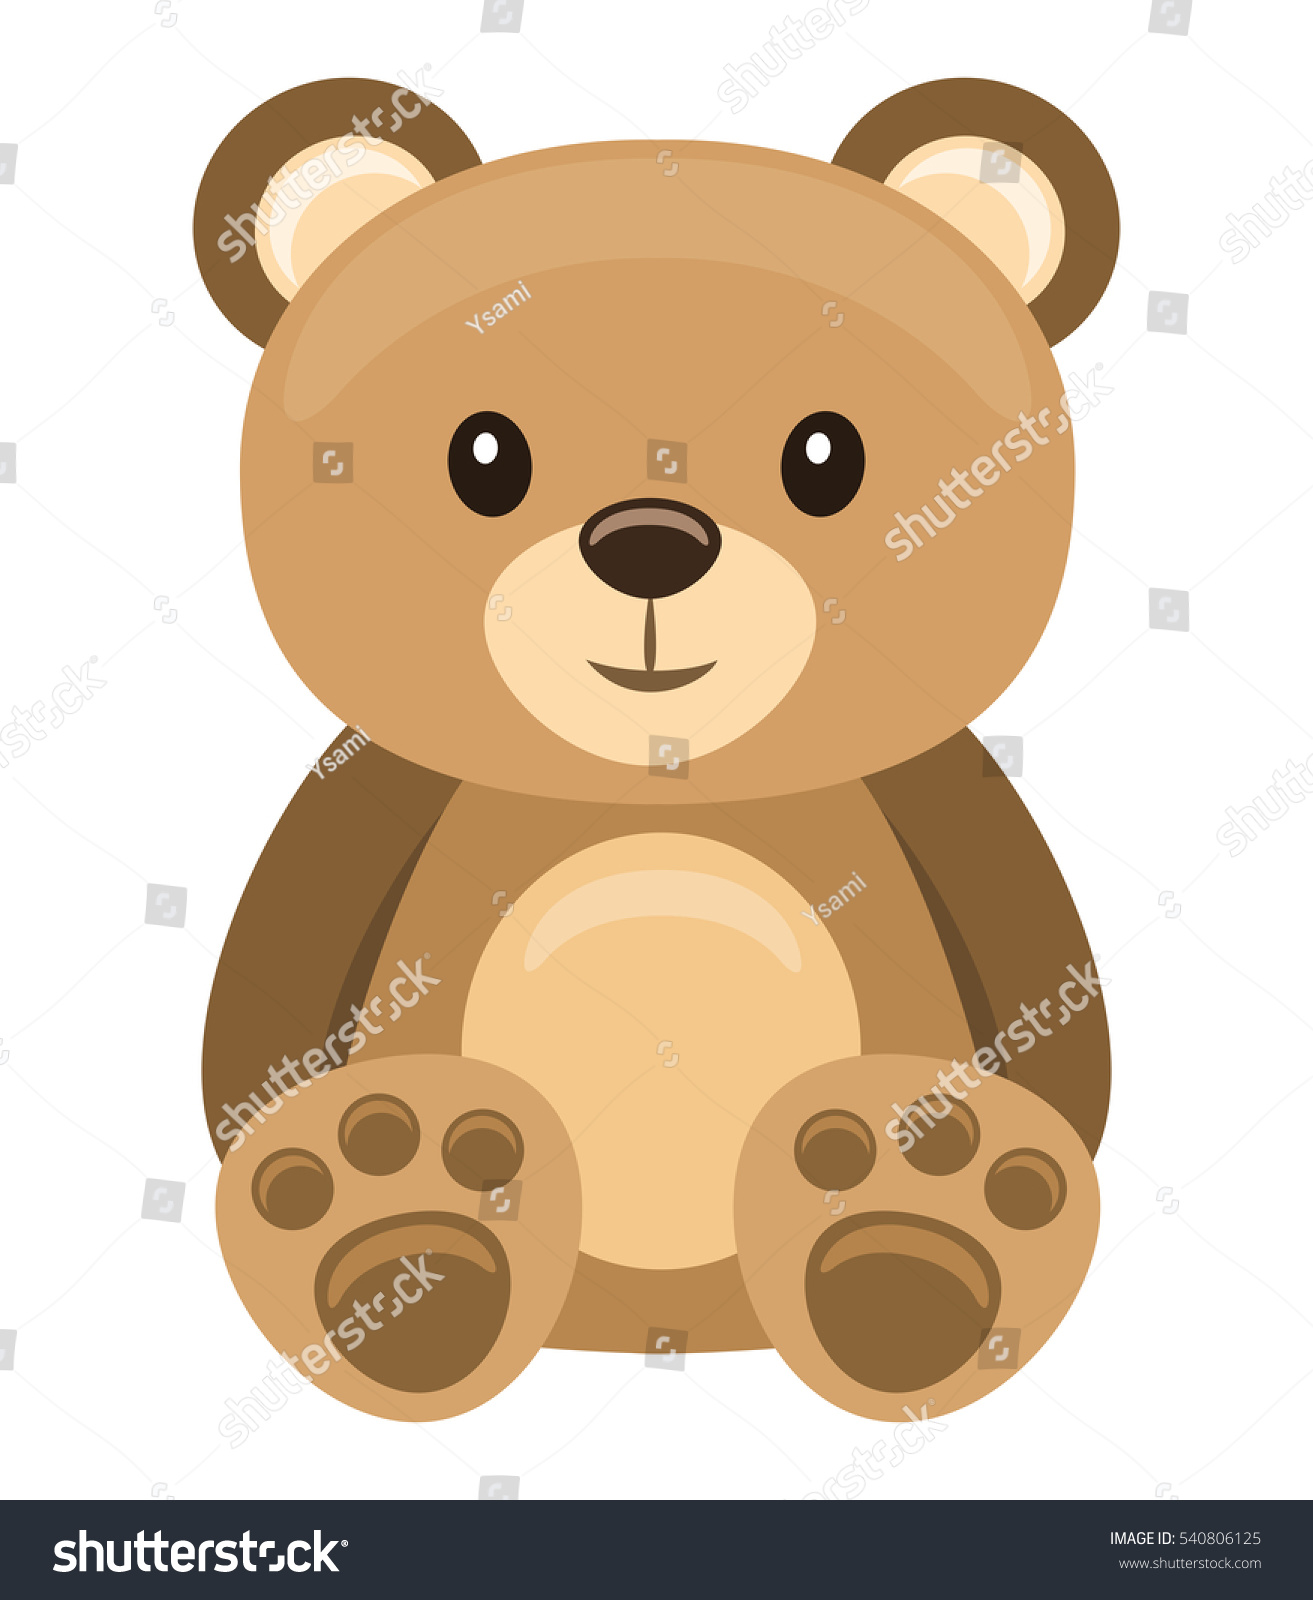 character teddy bears